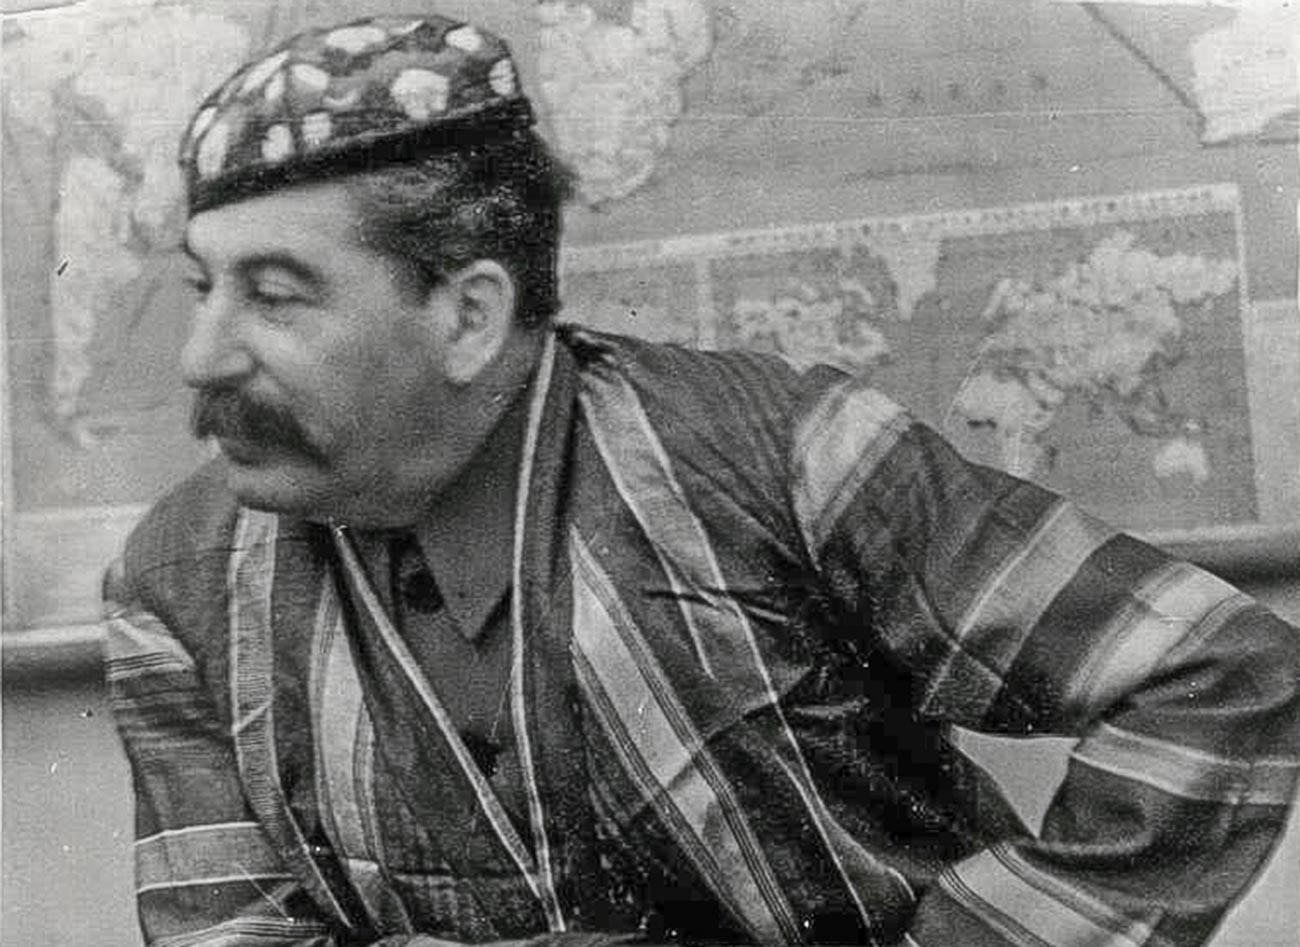 Joseph Stalin in Uzbek national clothes, 1930s